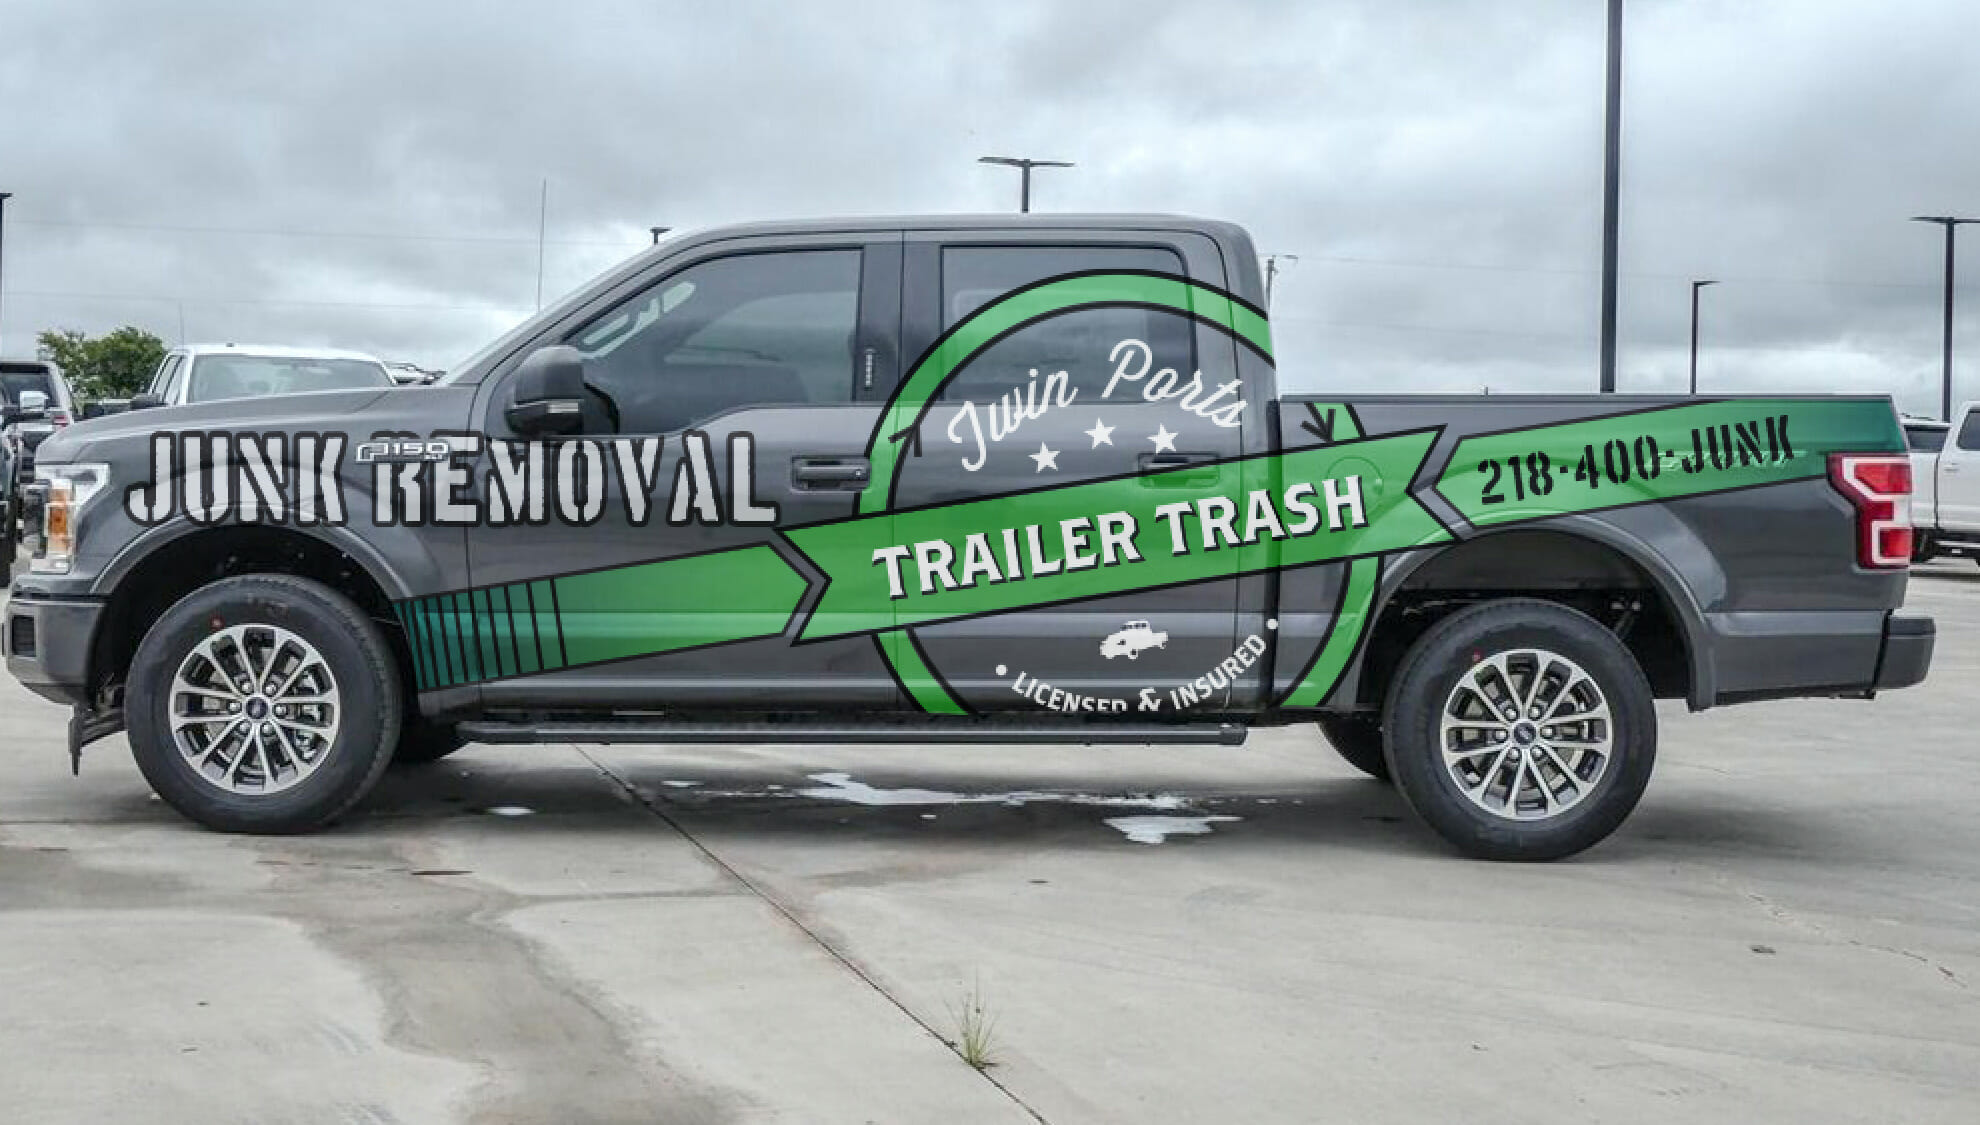 Twin Ports Trailer Trash truck design, created by Šek Design Studio